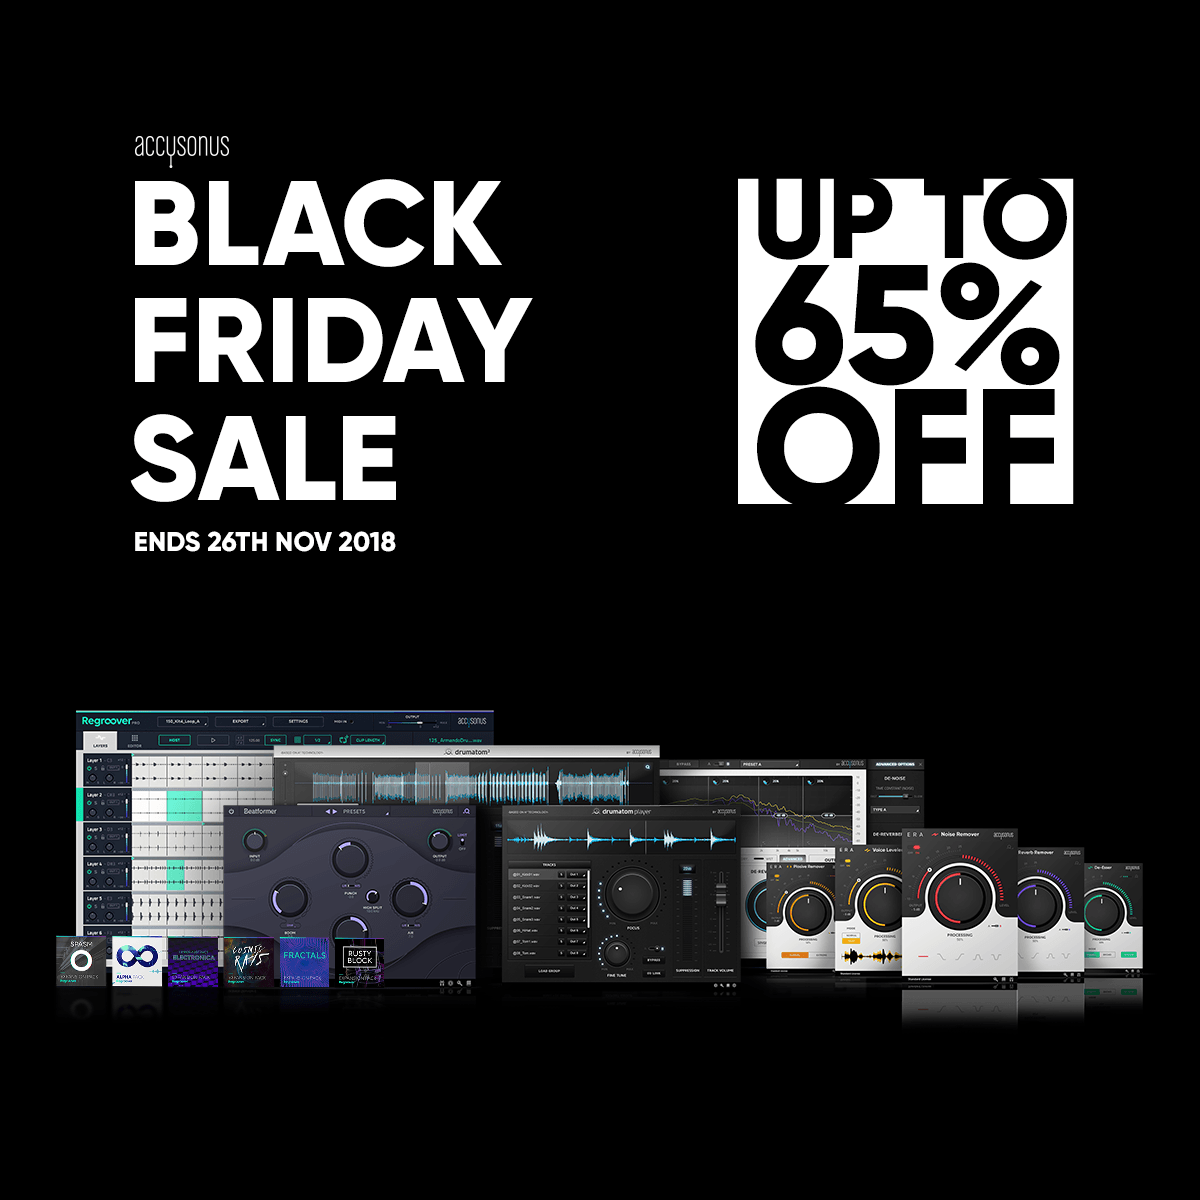 Accusonus Black Friday Sale 2018 - up to 65% off